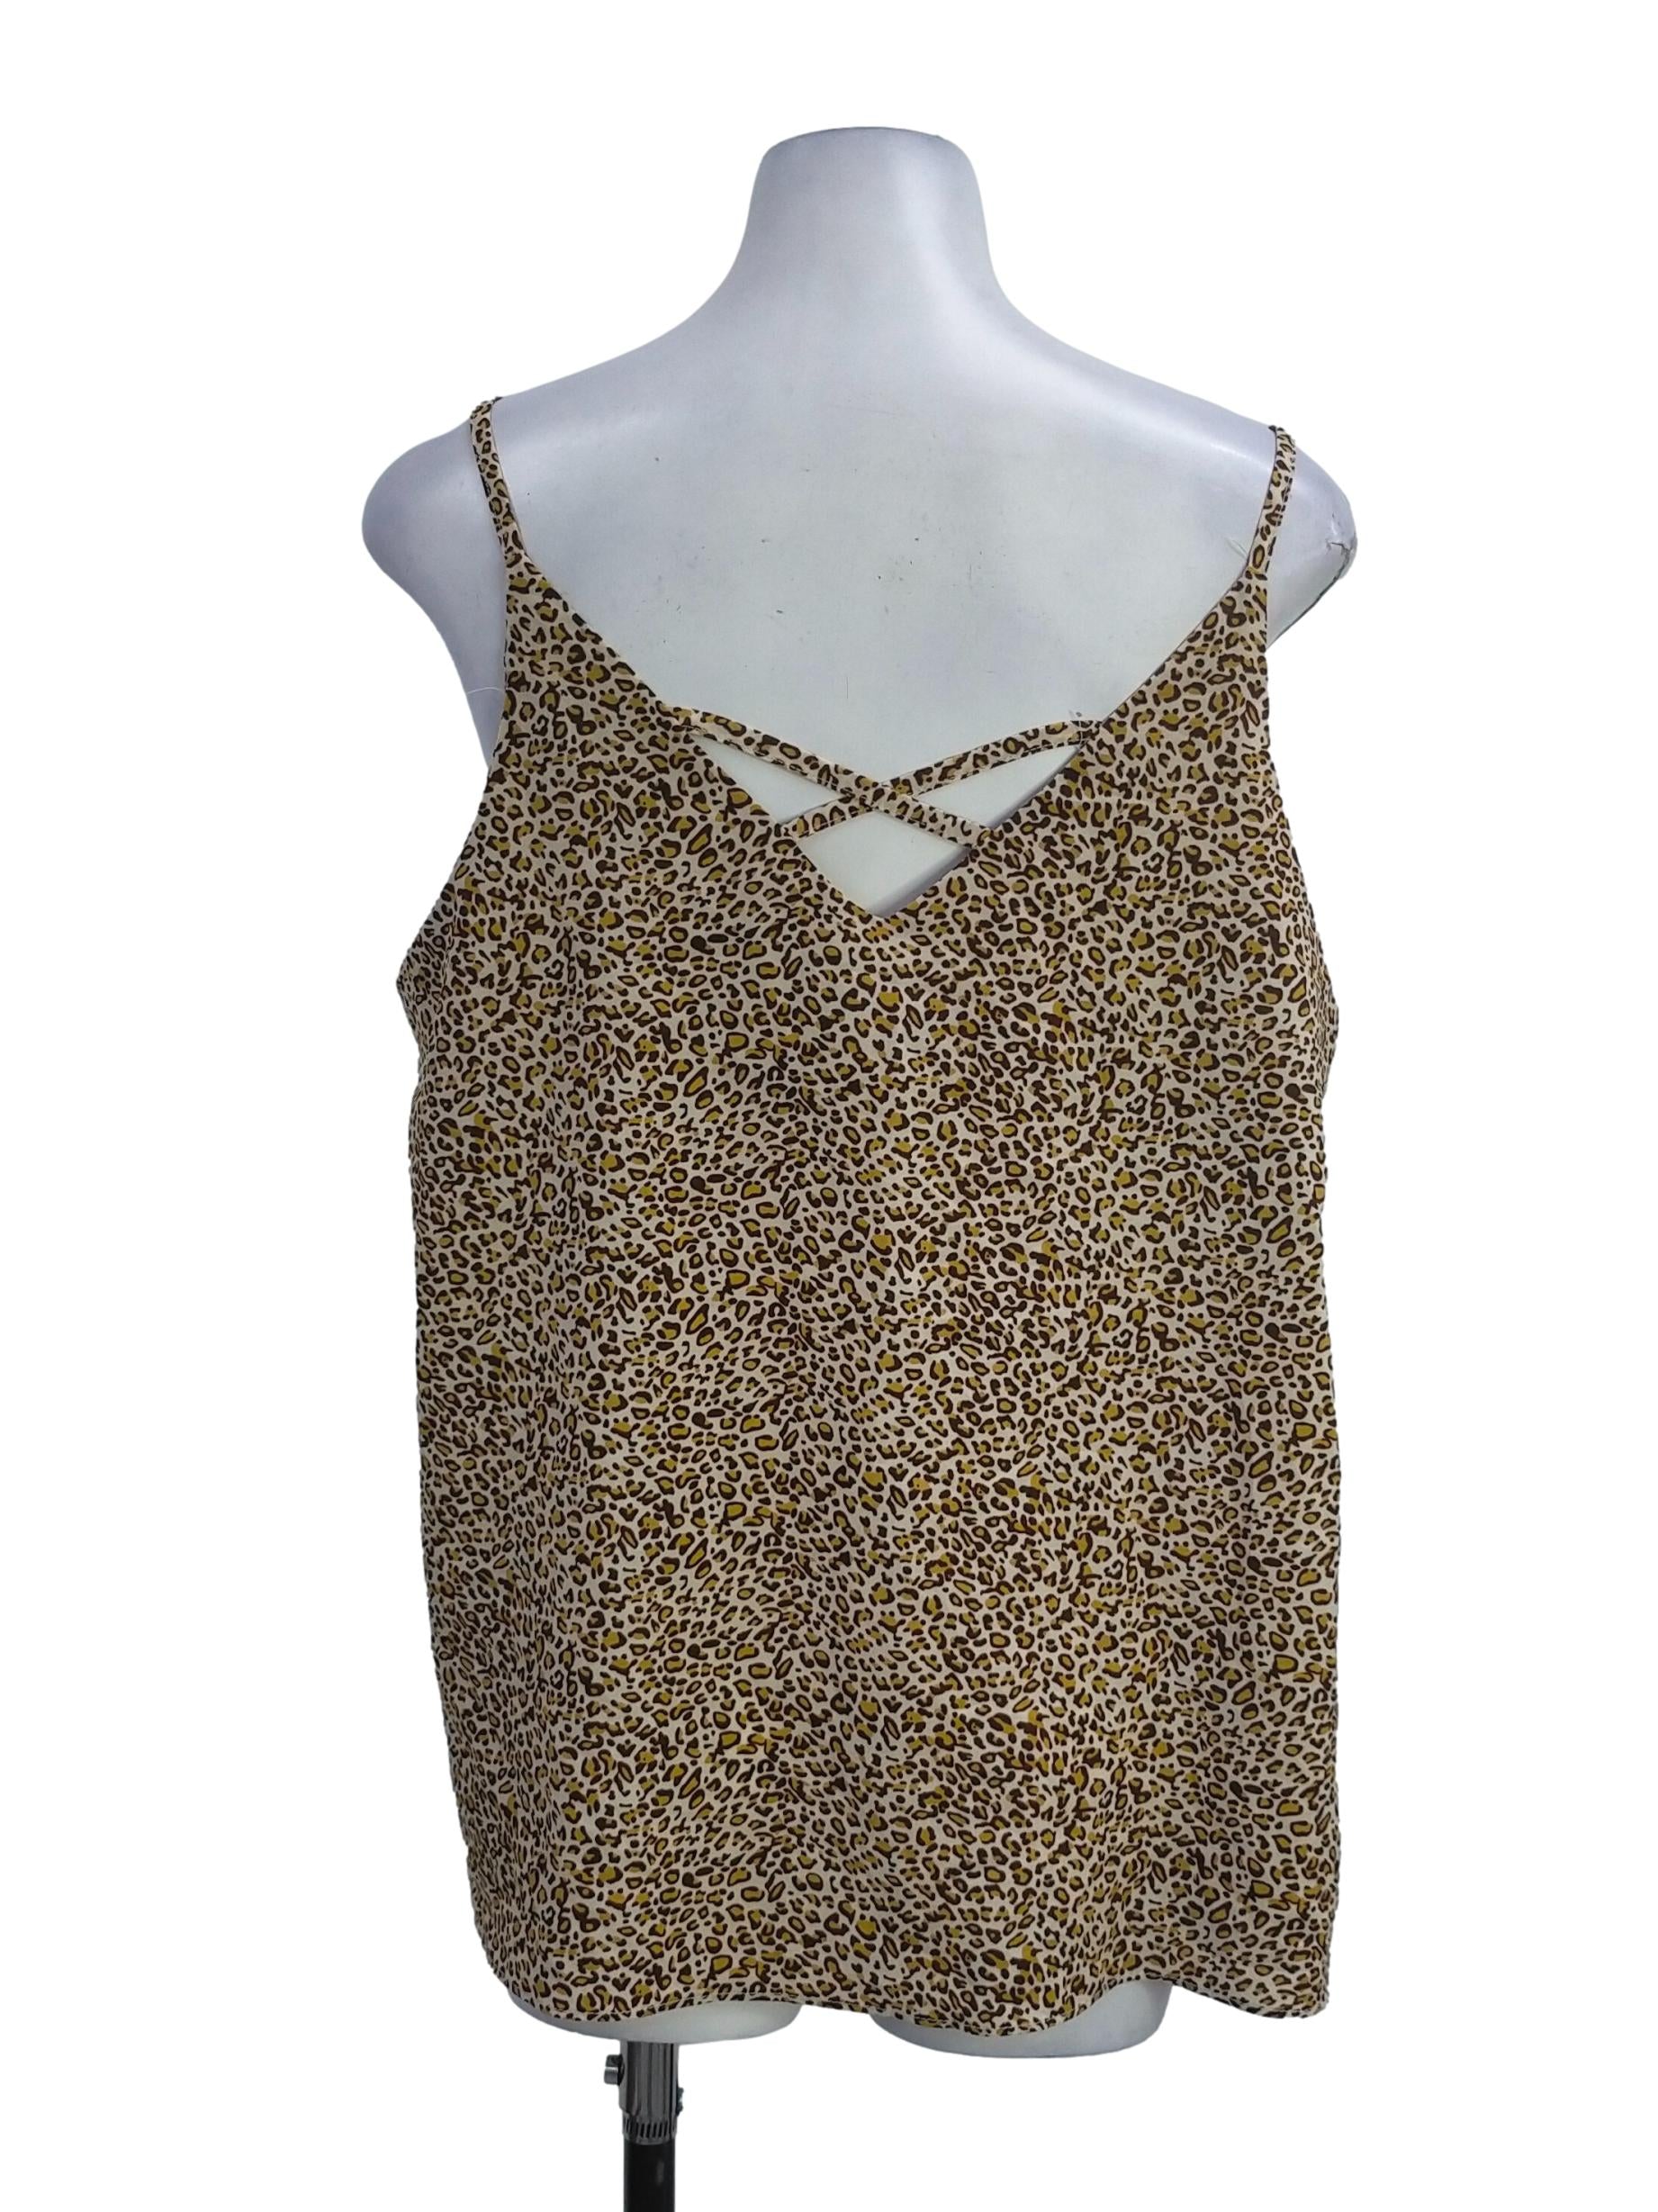 Brown Cheetah Gingham Pattern Sleeveless Top